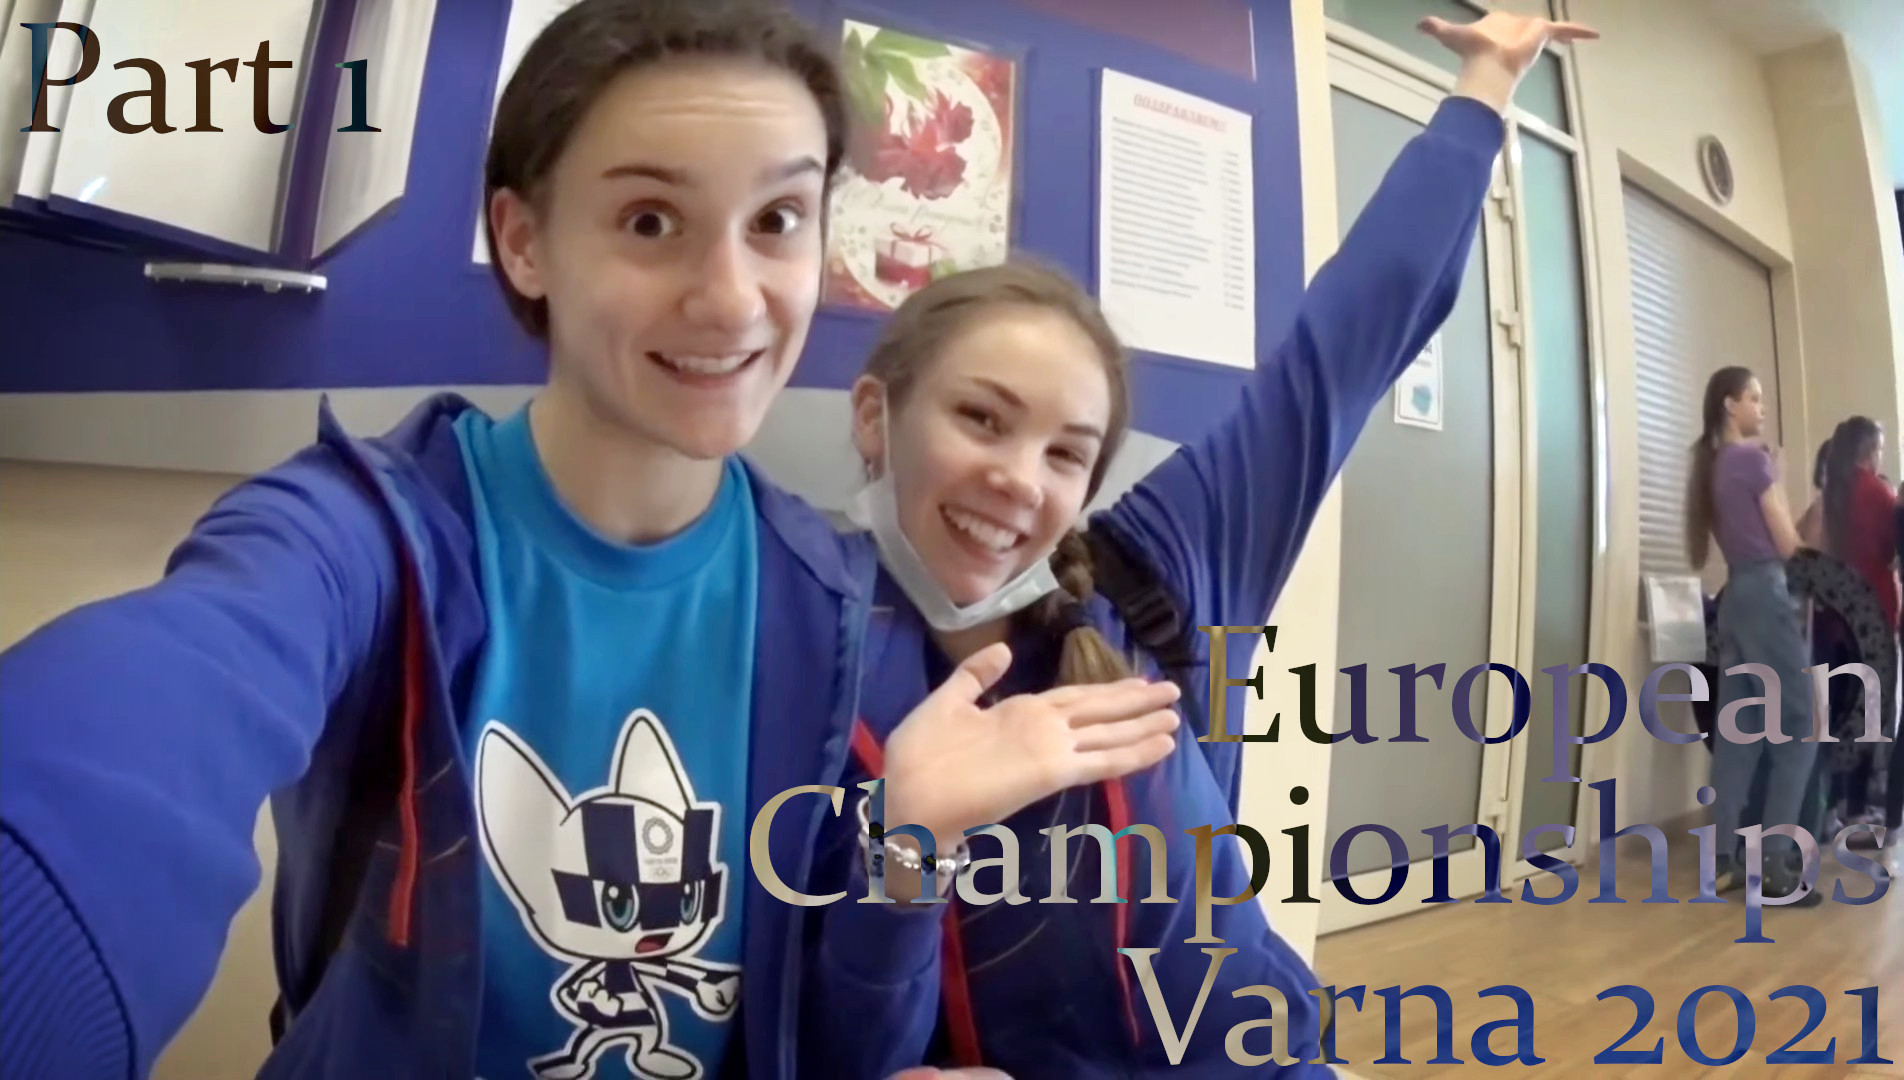 Harnosik Pictures - European Championships Varna 2021 Part 1